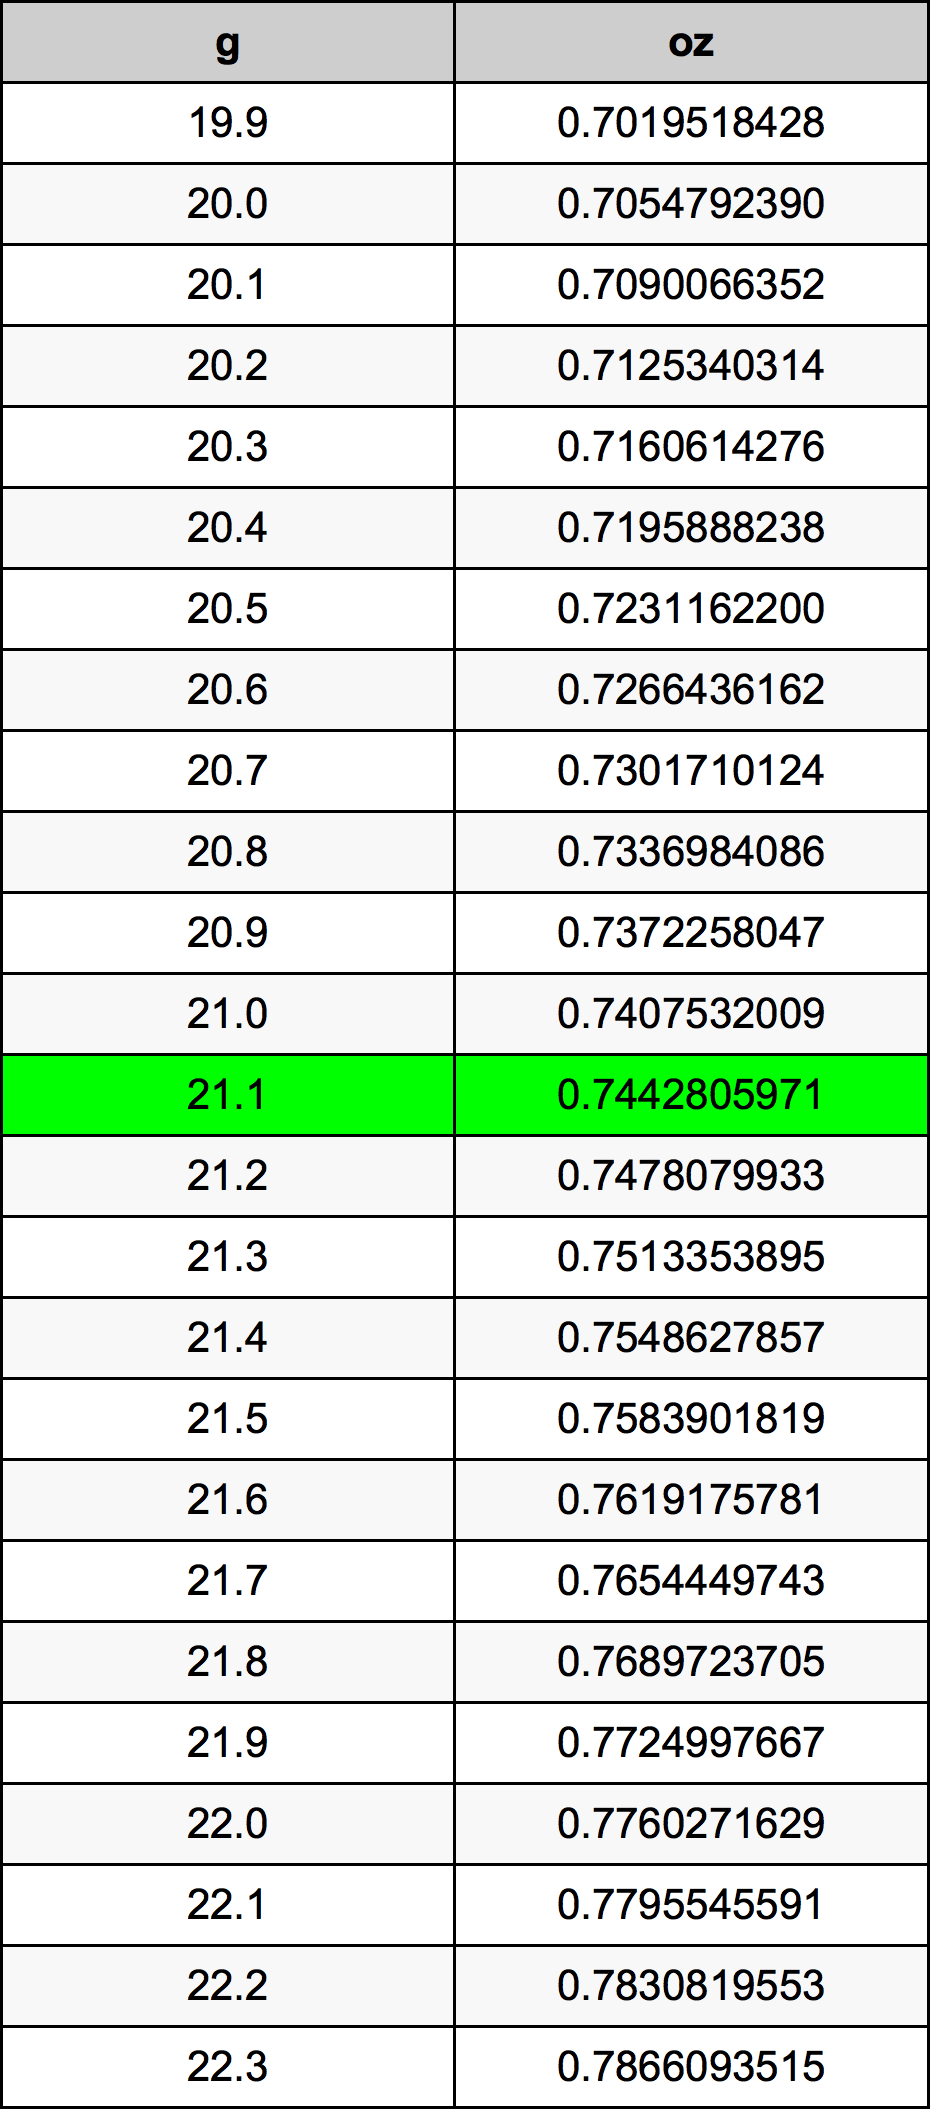 21.1 غرام جدول تحويل